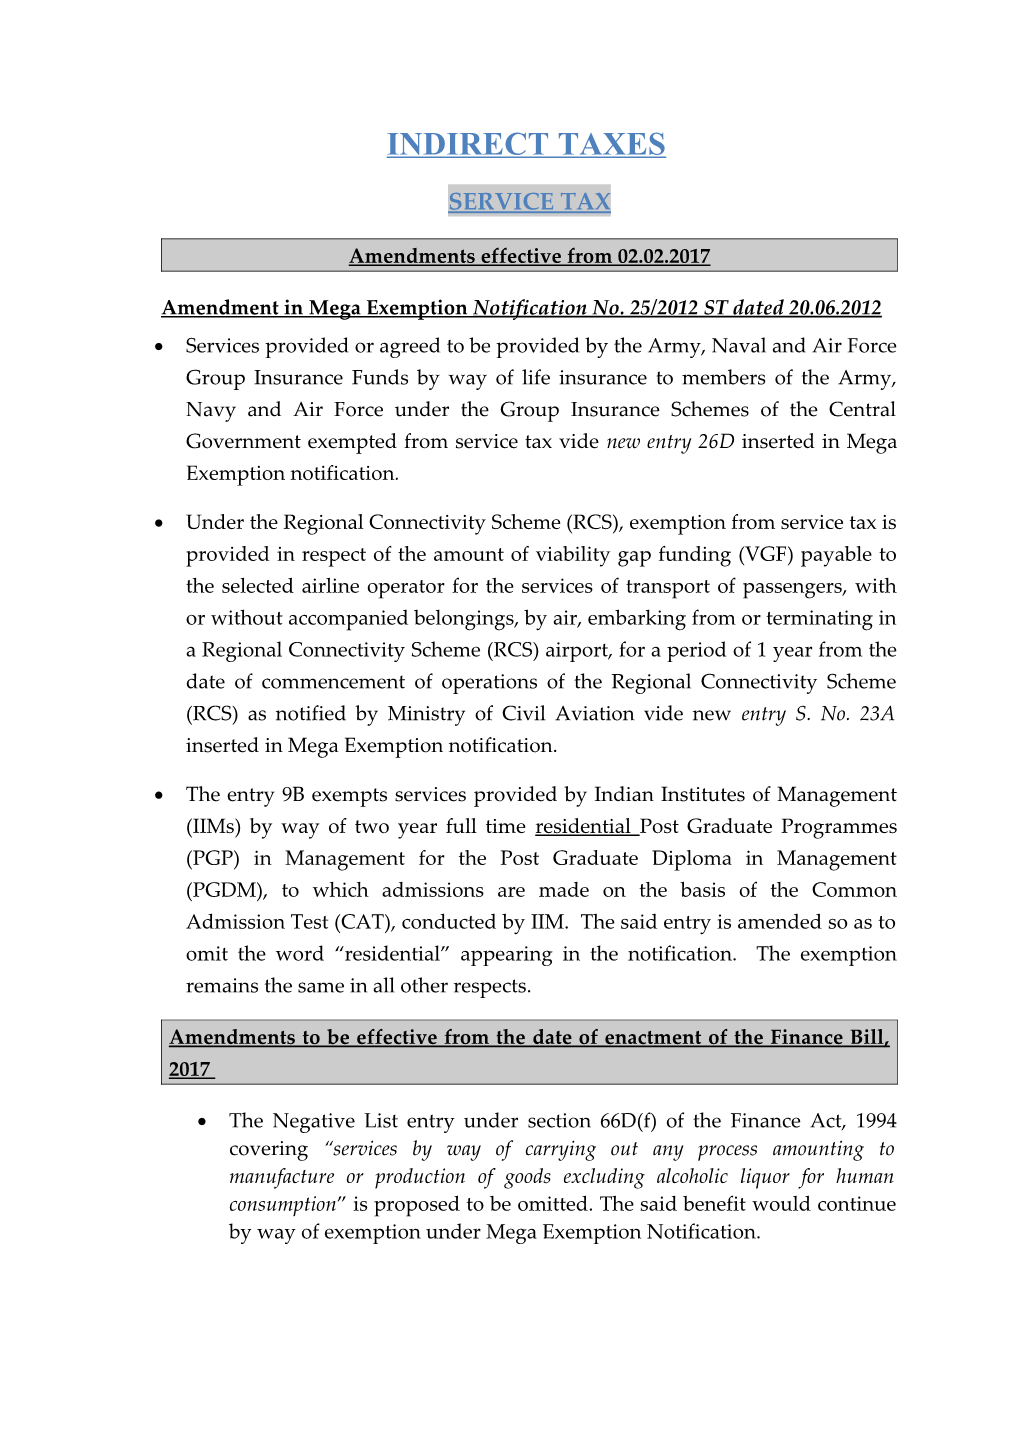 Amendment in Mega Exemption Notification No. 25/2012 ST Dated 20.06.2012